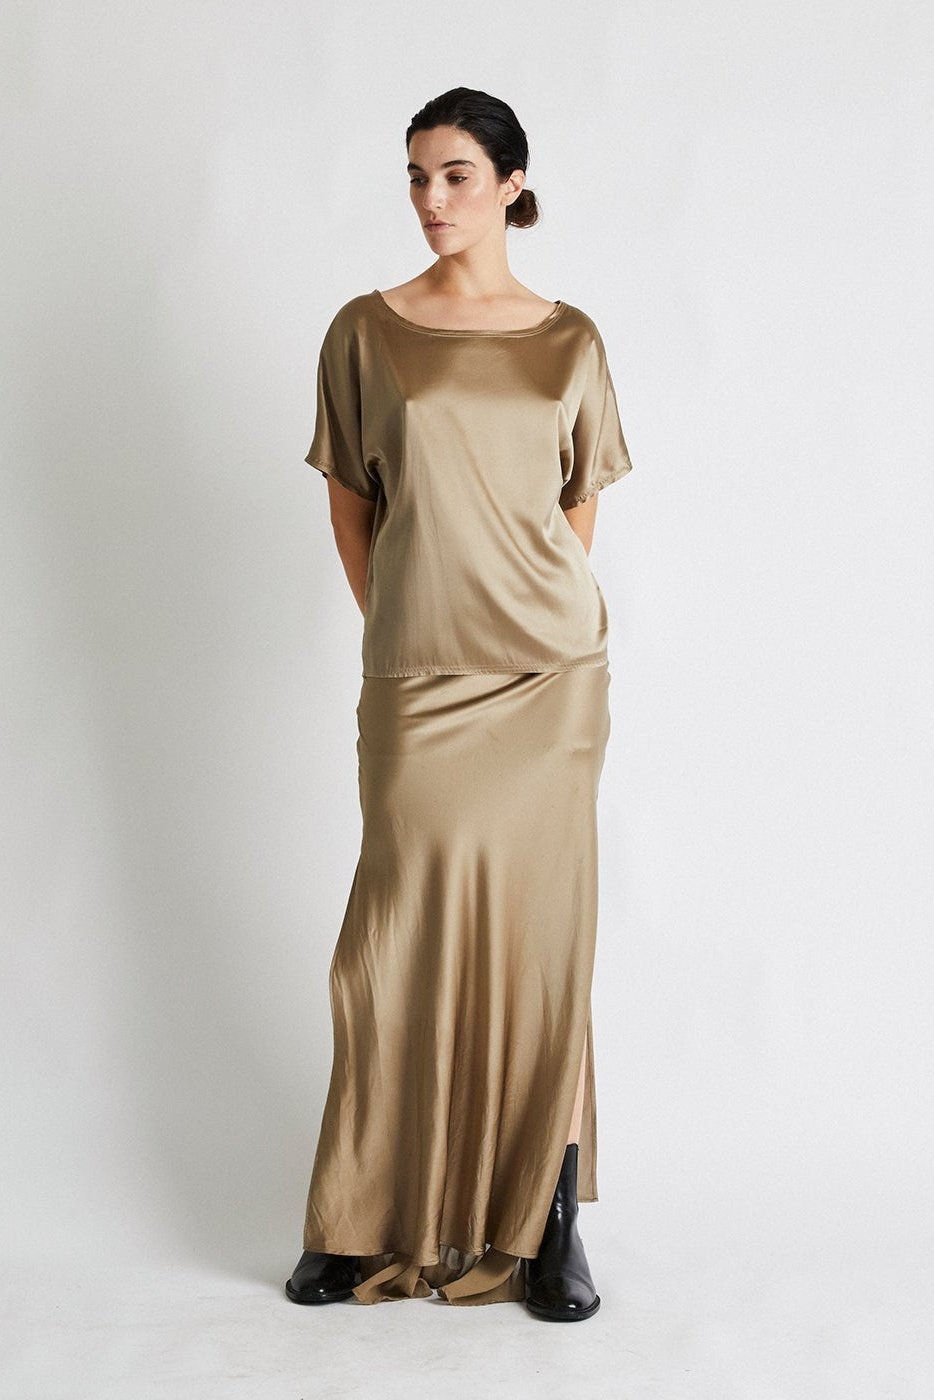 +Beryll Silk Skirt Helena | Caramel - +Beryll Silk Skirt | Helena | Caramel - +Beryll Worn By Good People